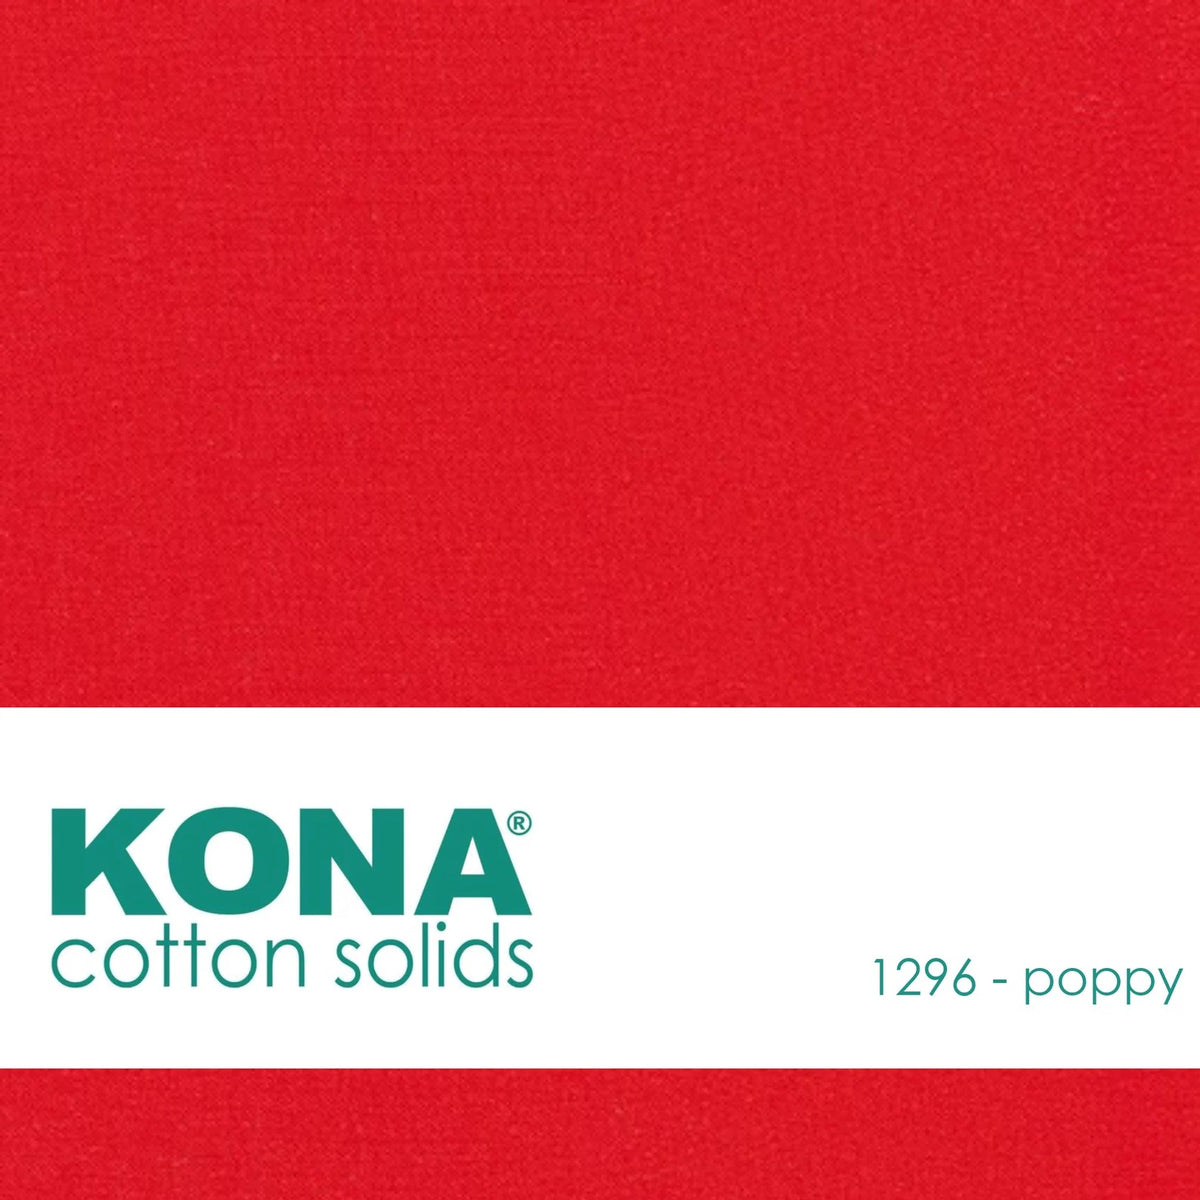 Kona Cotton Solid Fabric in Poppy